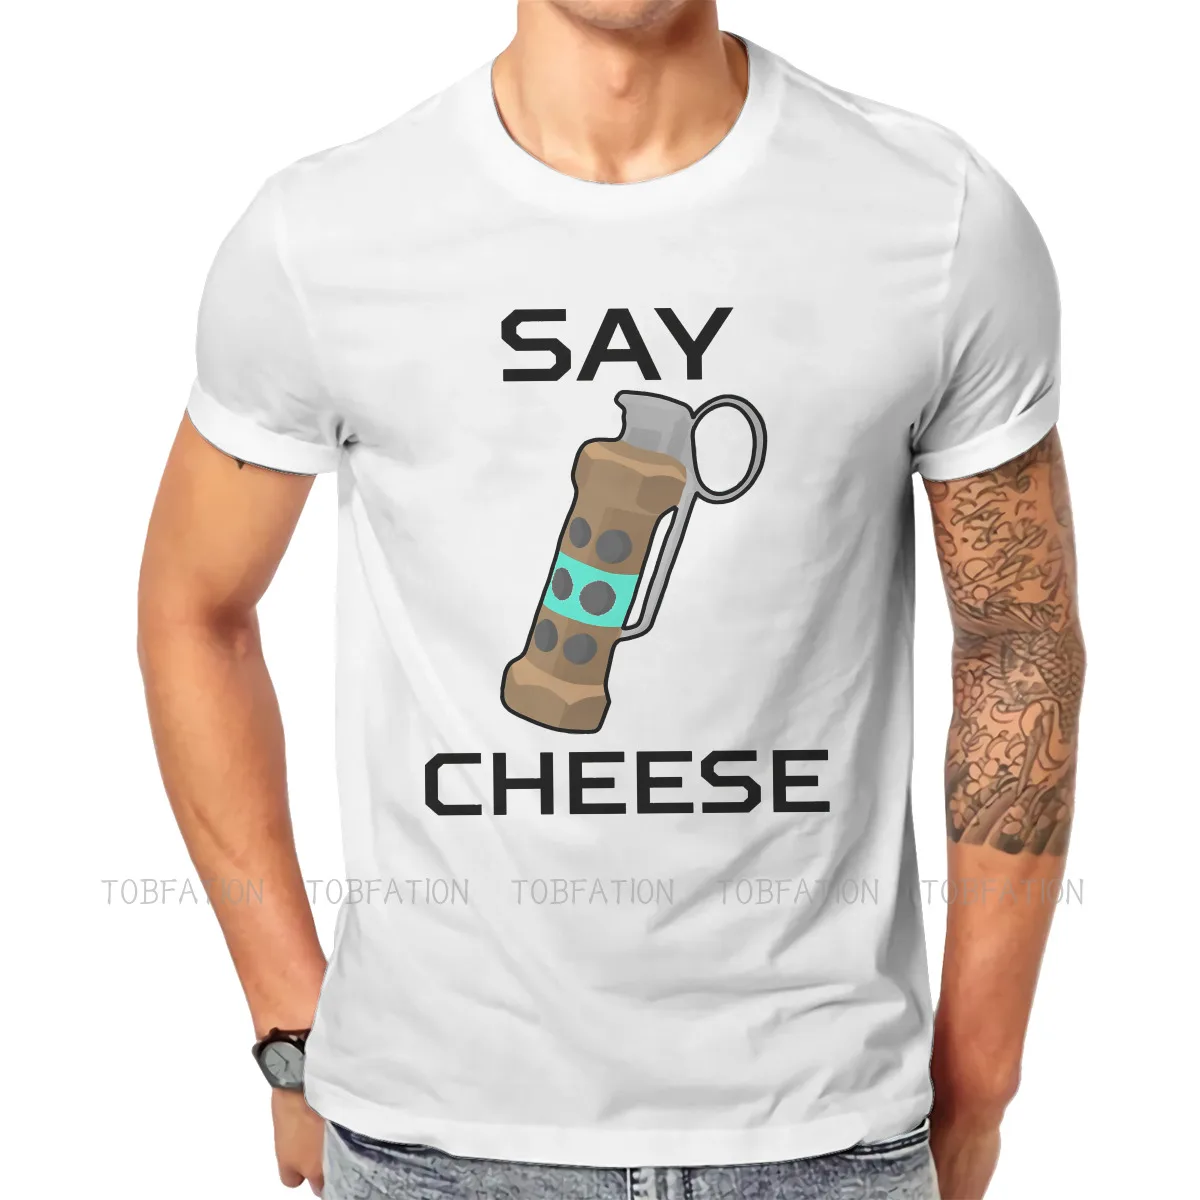 CSGO-Camiseta de juego de disparos en línea para hombre, camisa de Flashbang, de algodón, de verano